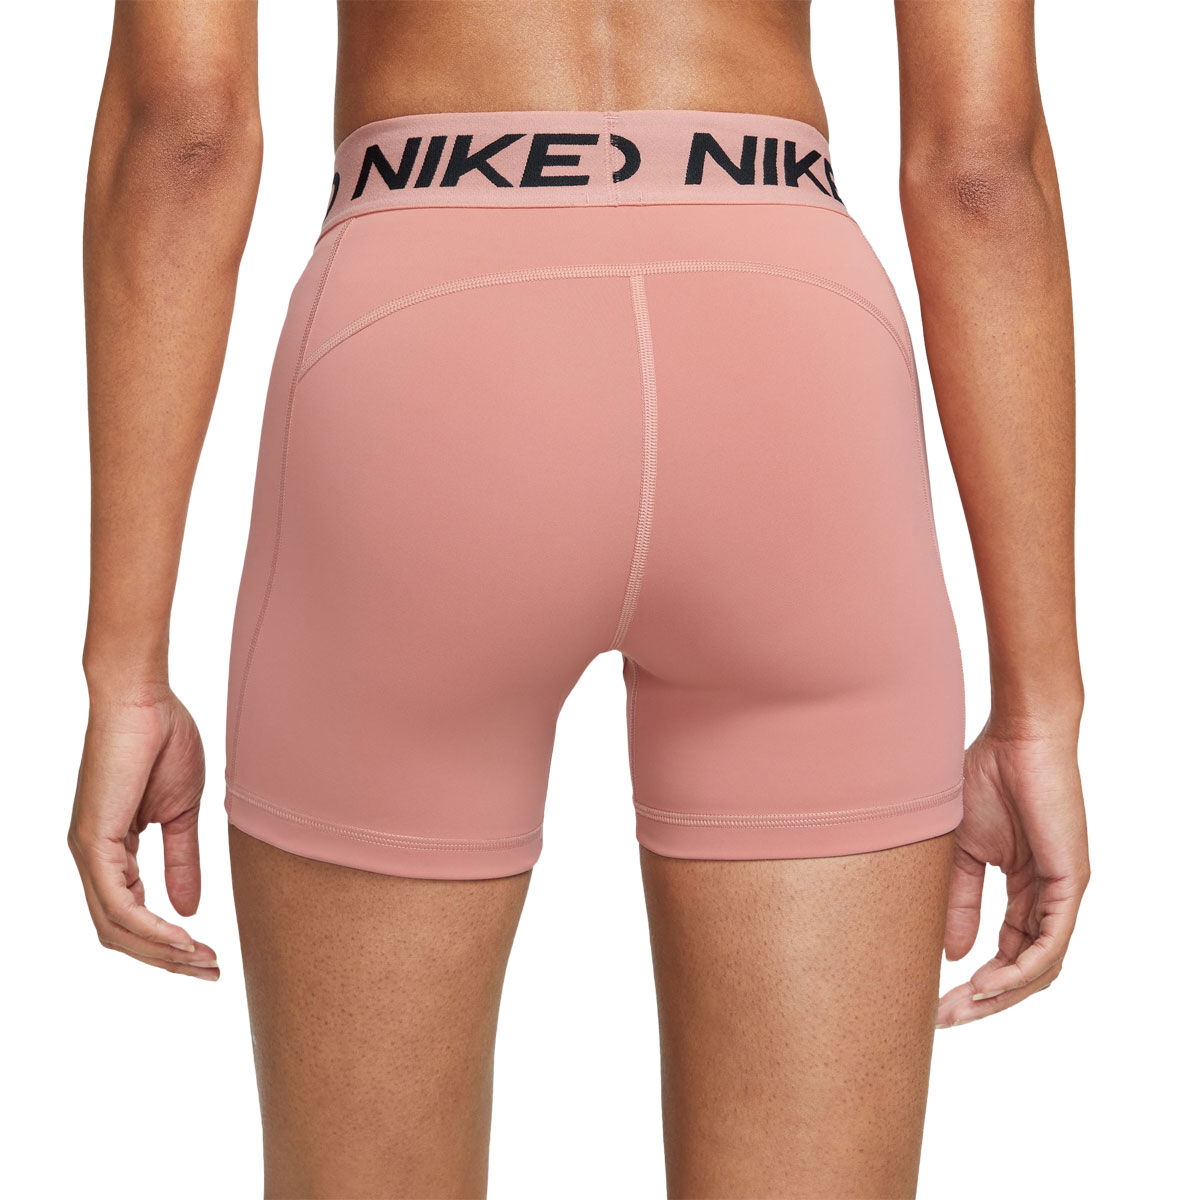 Nike Little Girls 2T-6X Pro Nike Bike Shorts